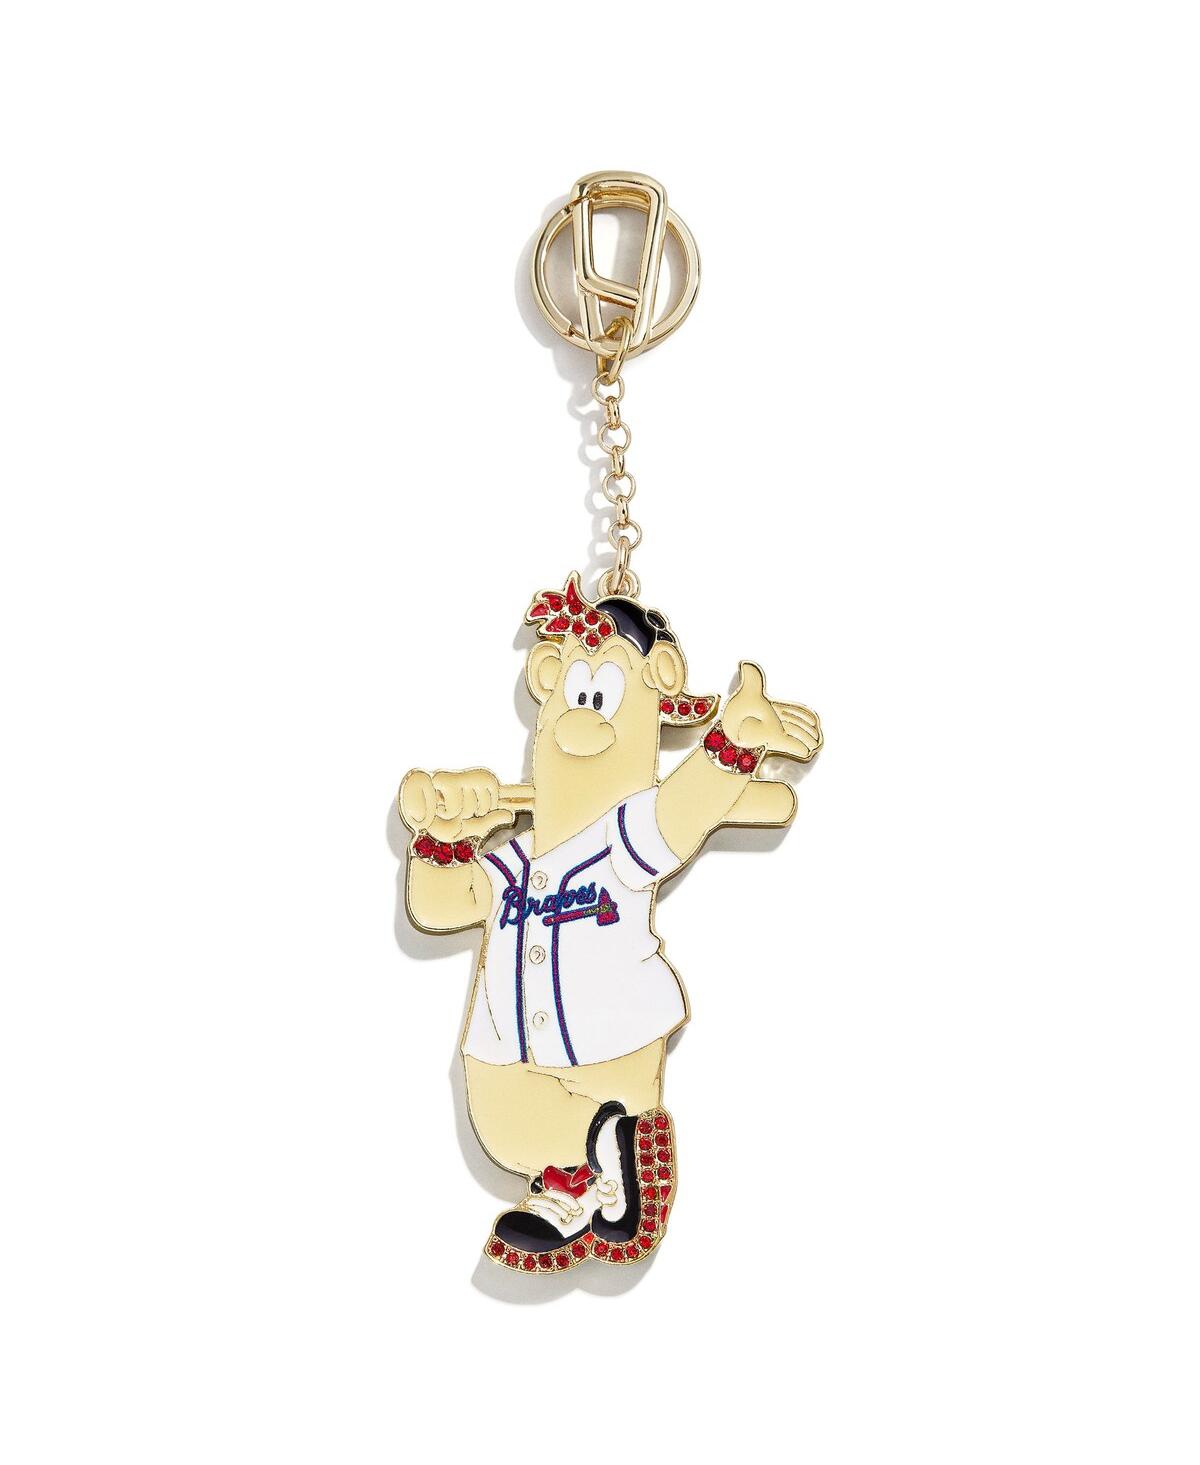 Baublebar Atlanta Braves Mascot Bag Keychain In Gold